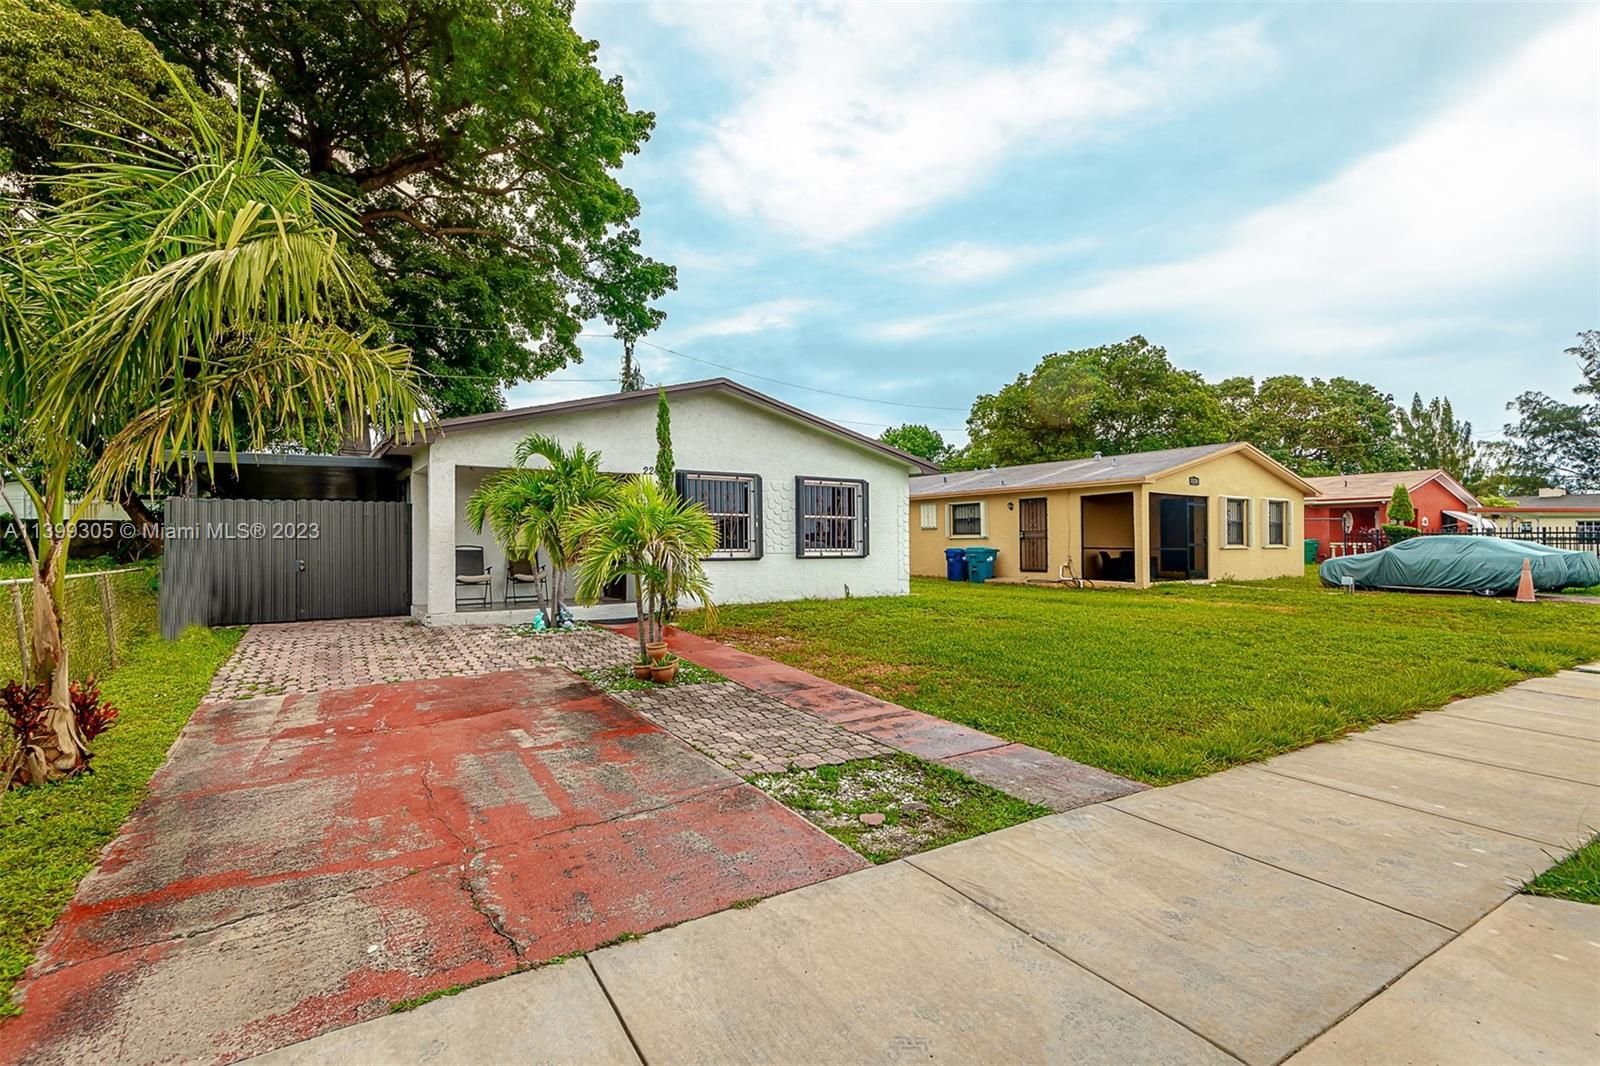 Real estate property located at 2245 170th Ter, Miami-Dade County, Miami Gardens, FL